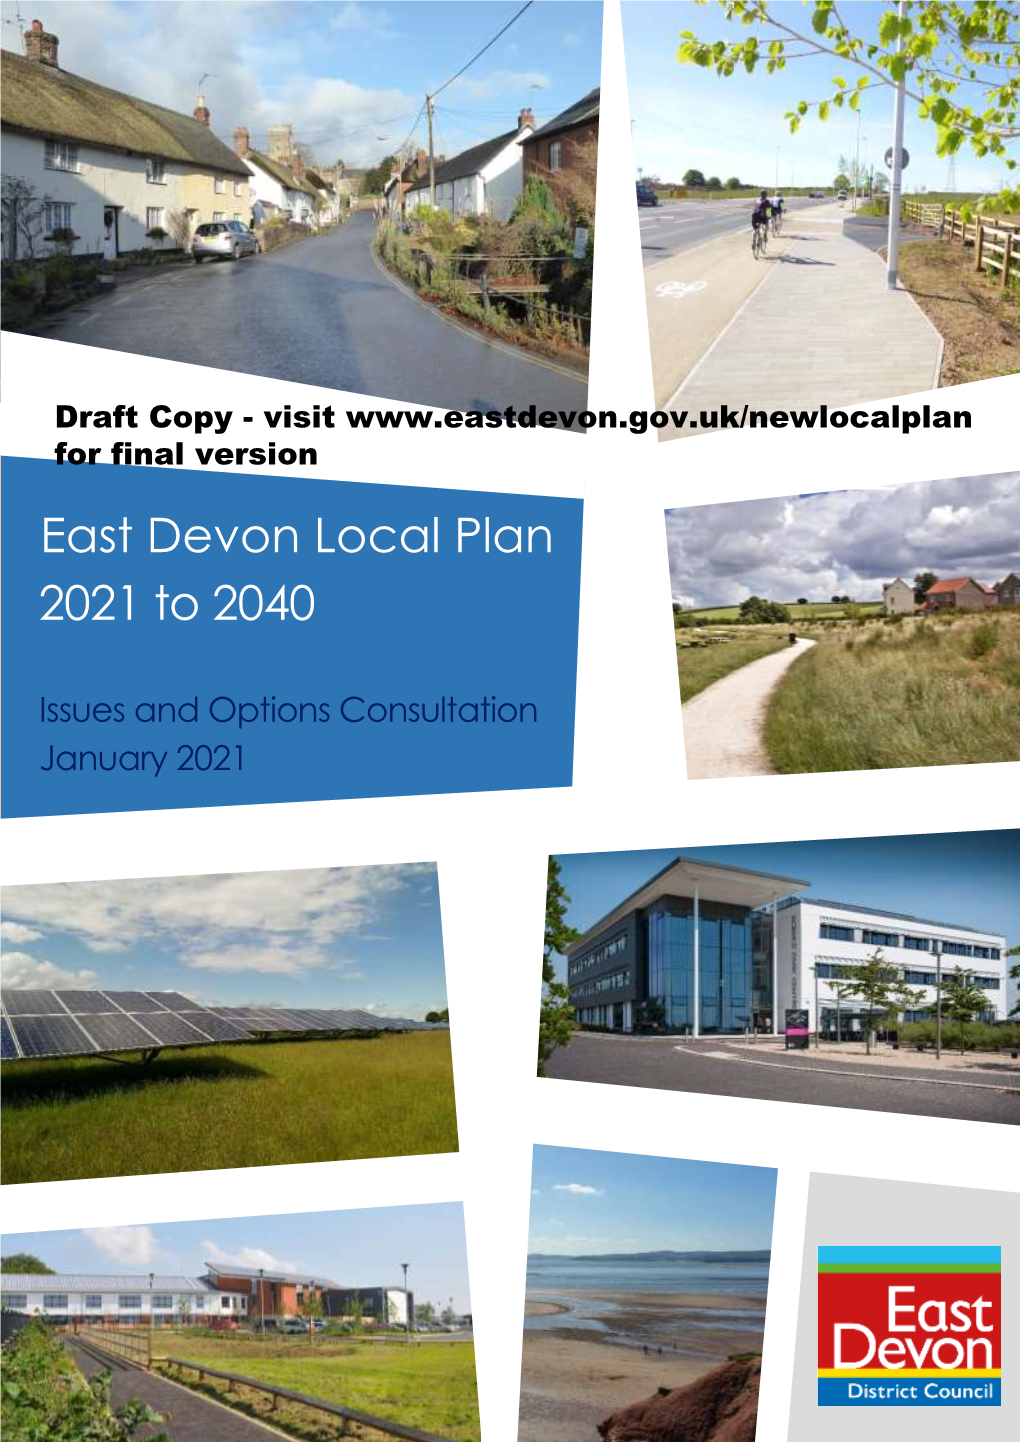 East Devon Local Plan 2021 to 2040